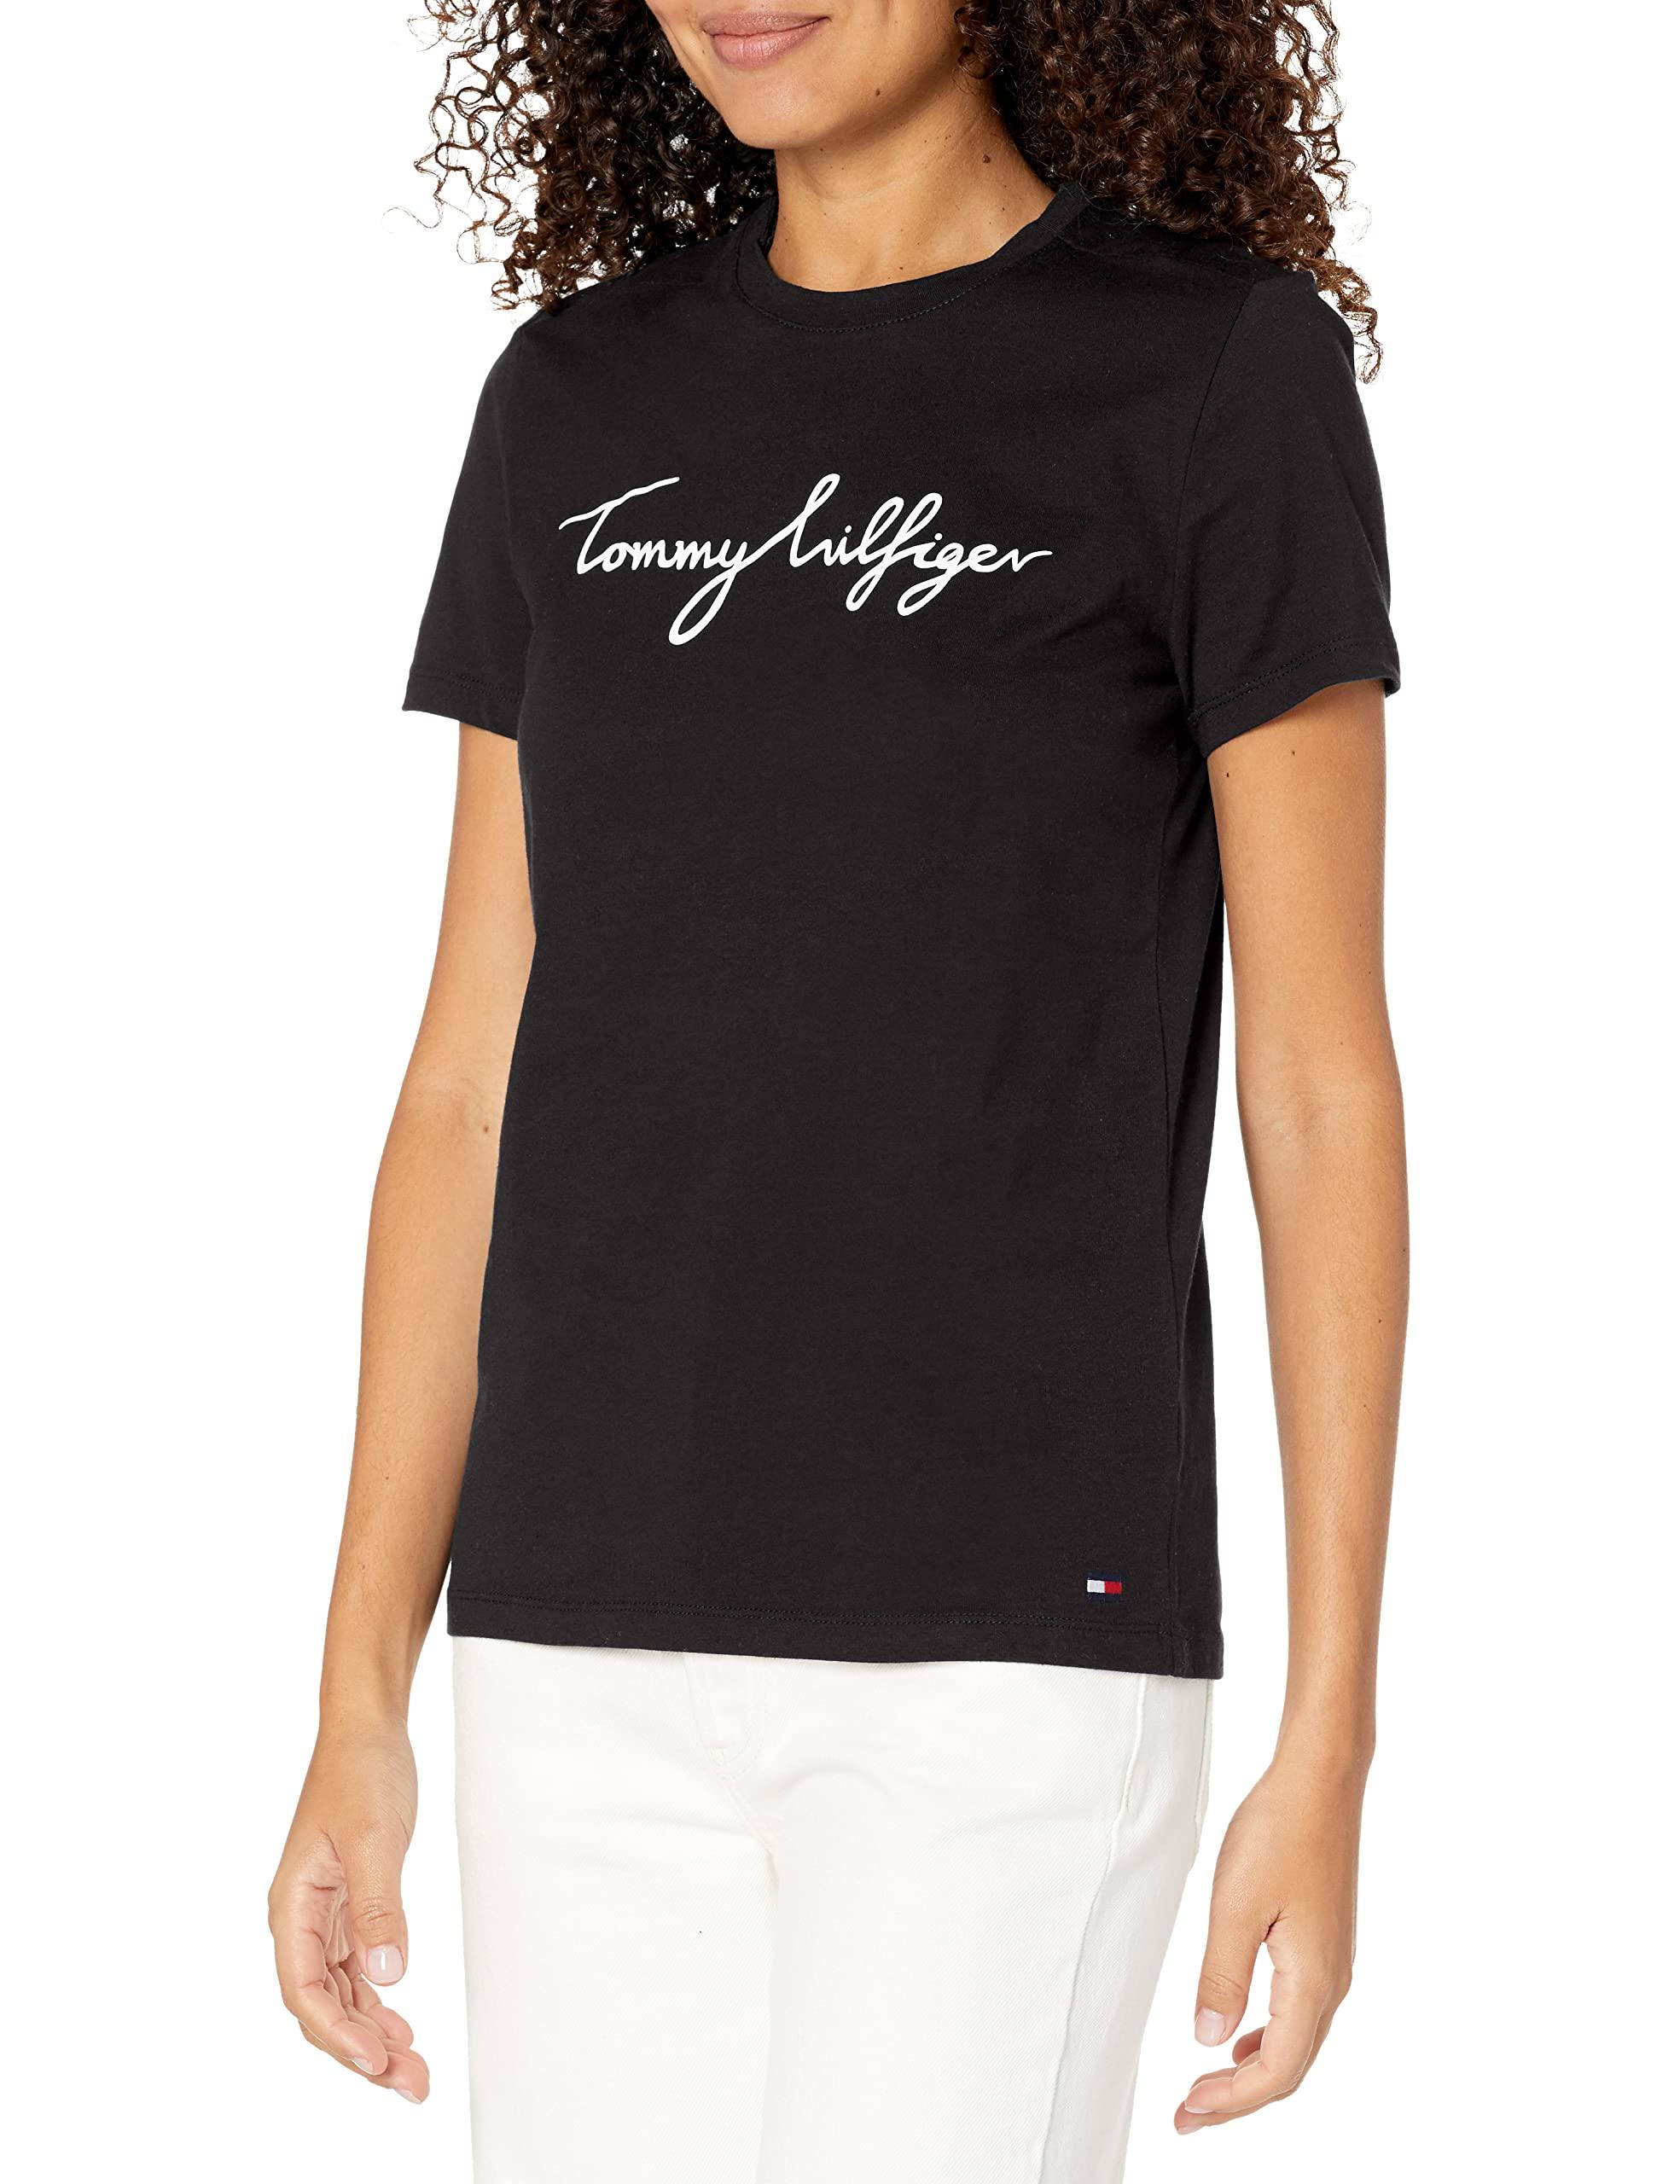 Tommy Hilfiger T-shirt in Black | Lyst